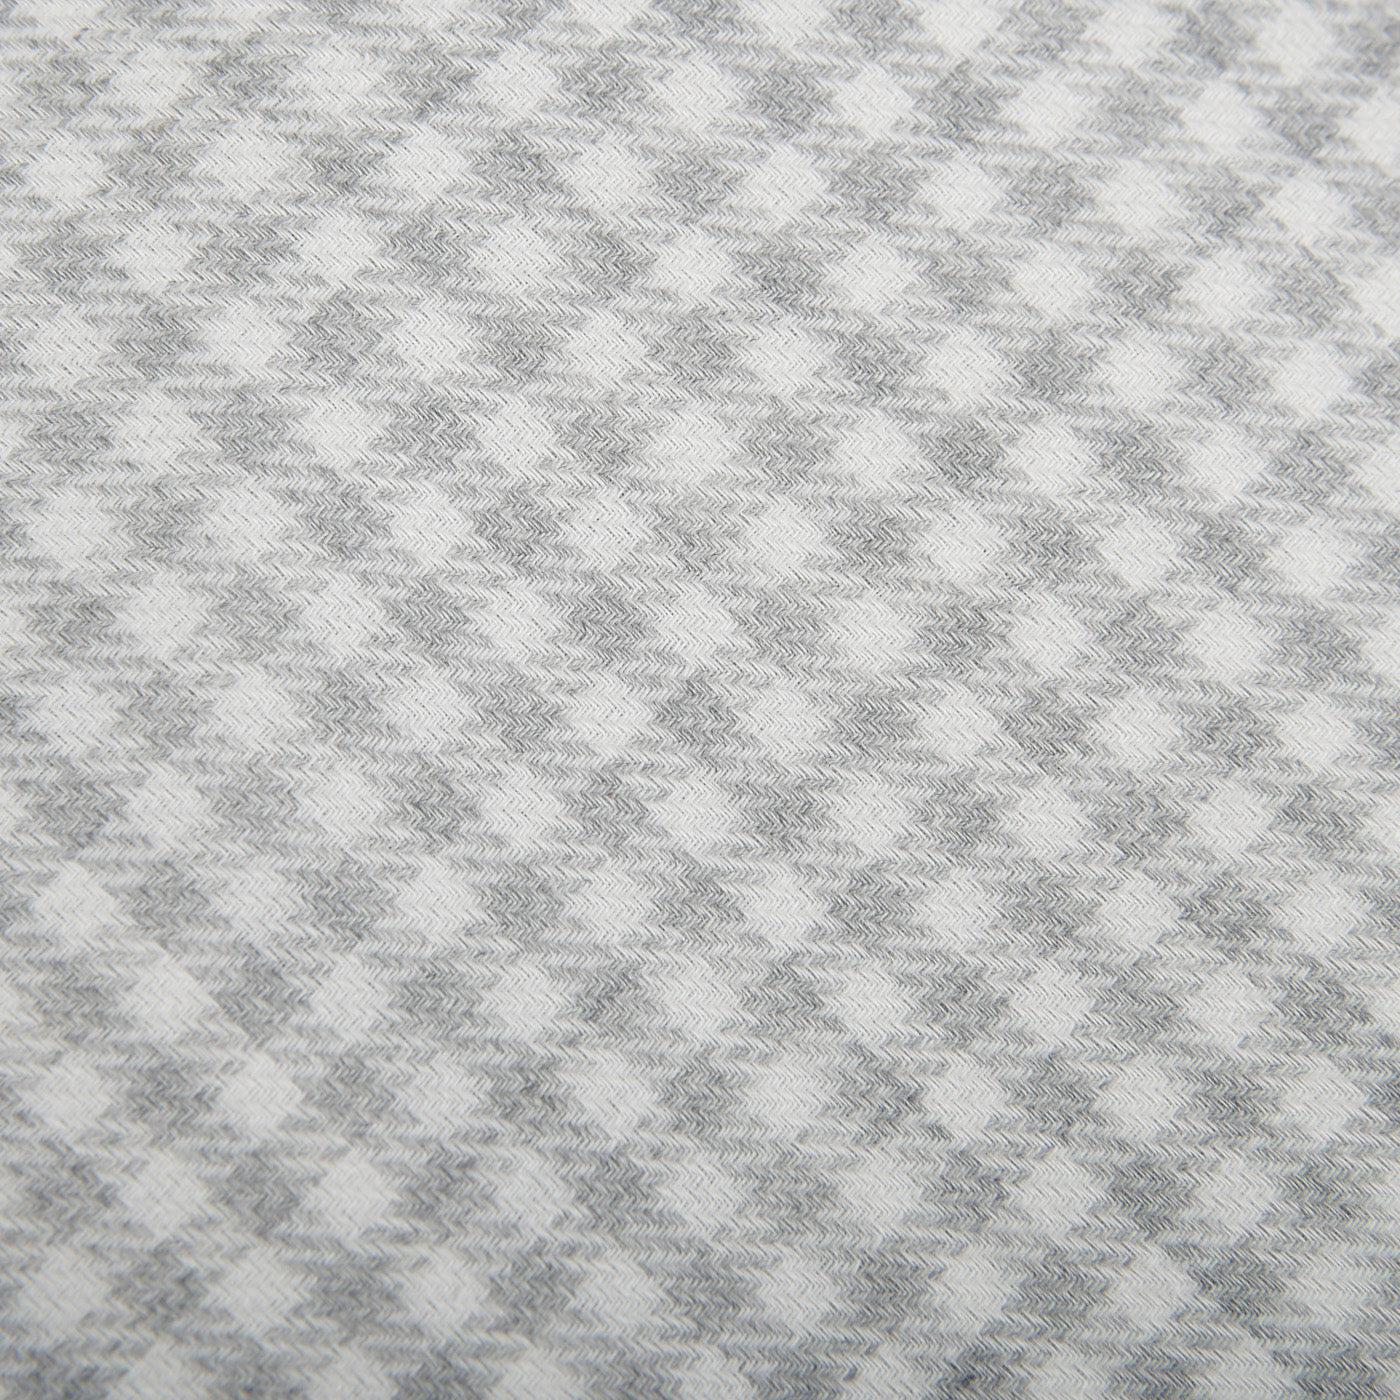 Mazzarelli White Checked Cotton Cashmere BD Slim Shirt Fabric